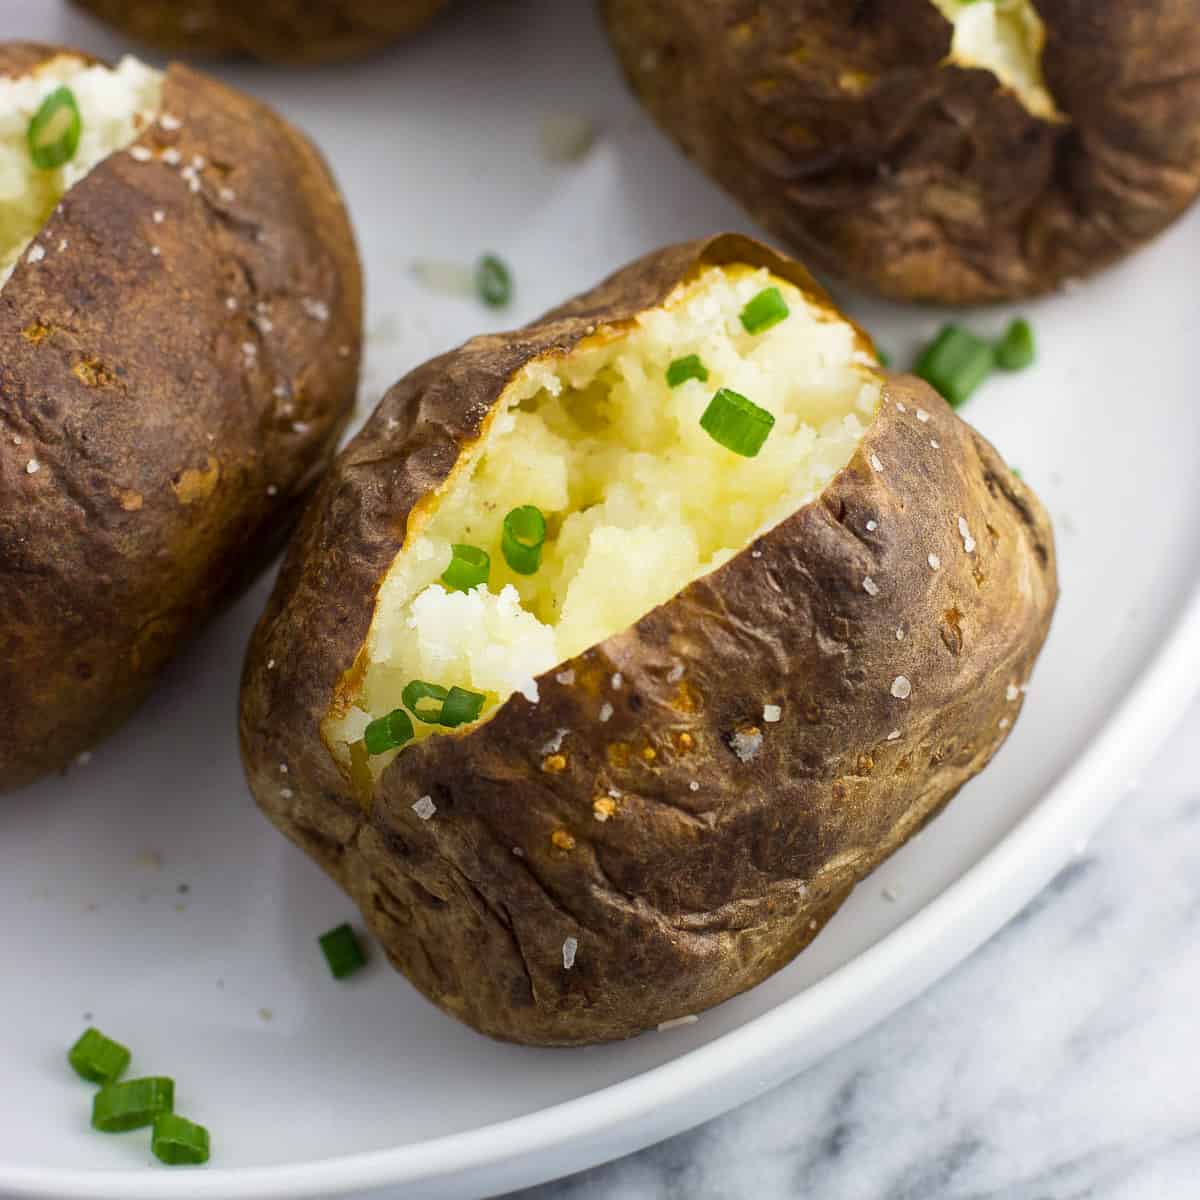 https://www.mysequinedlife.com/wp-content/uploads/2022/10/air-fryer-baked-potato-1200-square.jpg